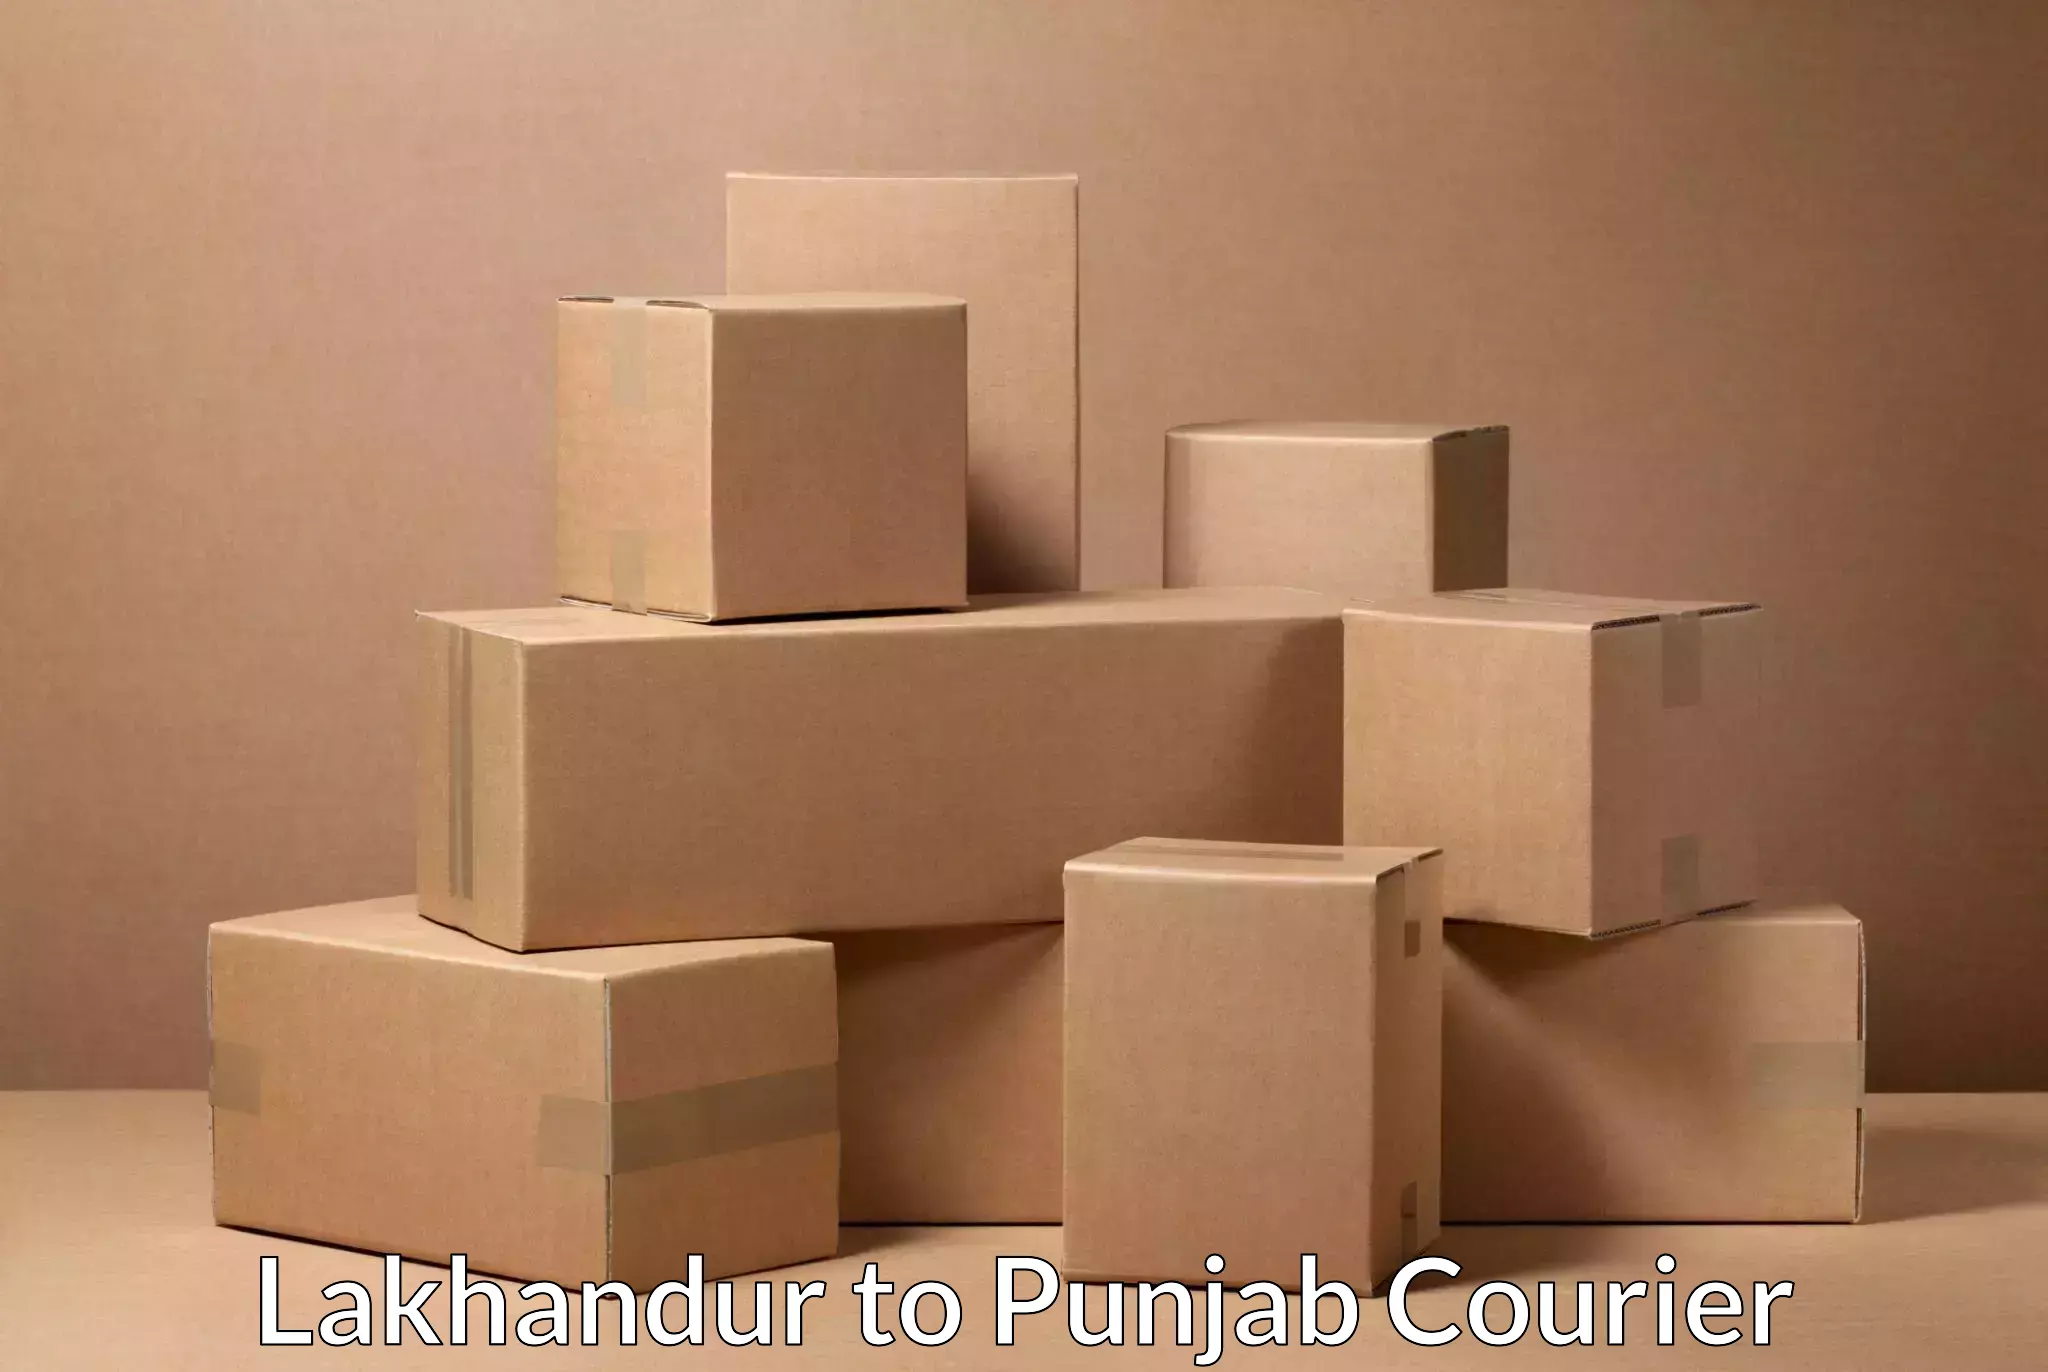 Cost-effective courier options Lakhandur to Zirakpur